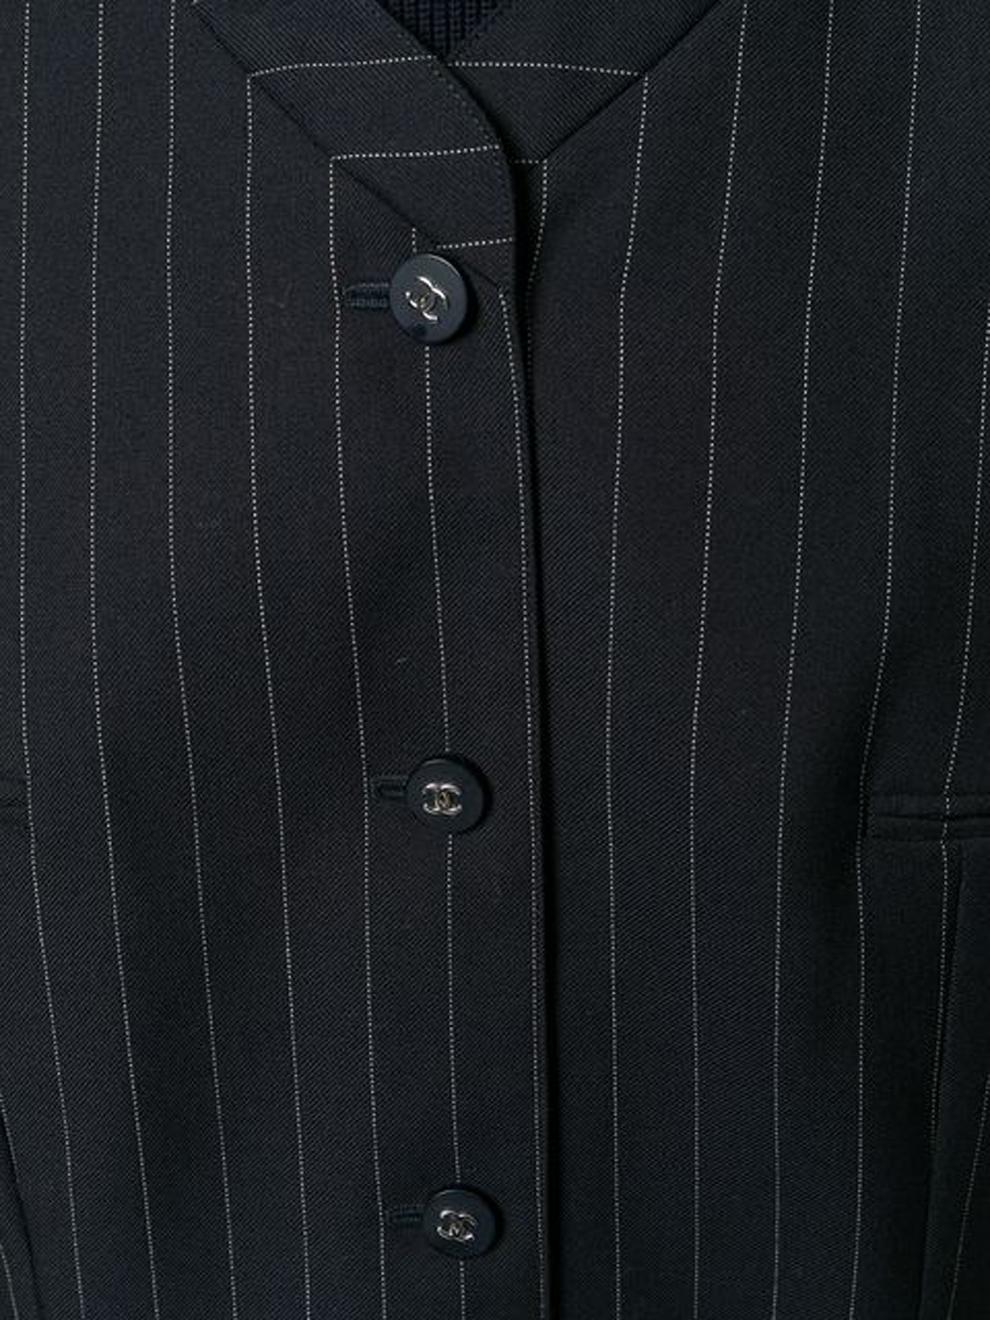 Black Chanel Pinstripe Jacket